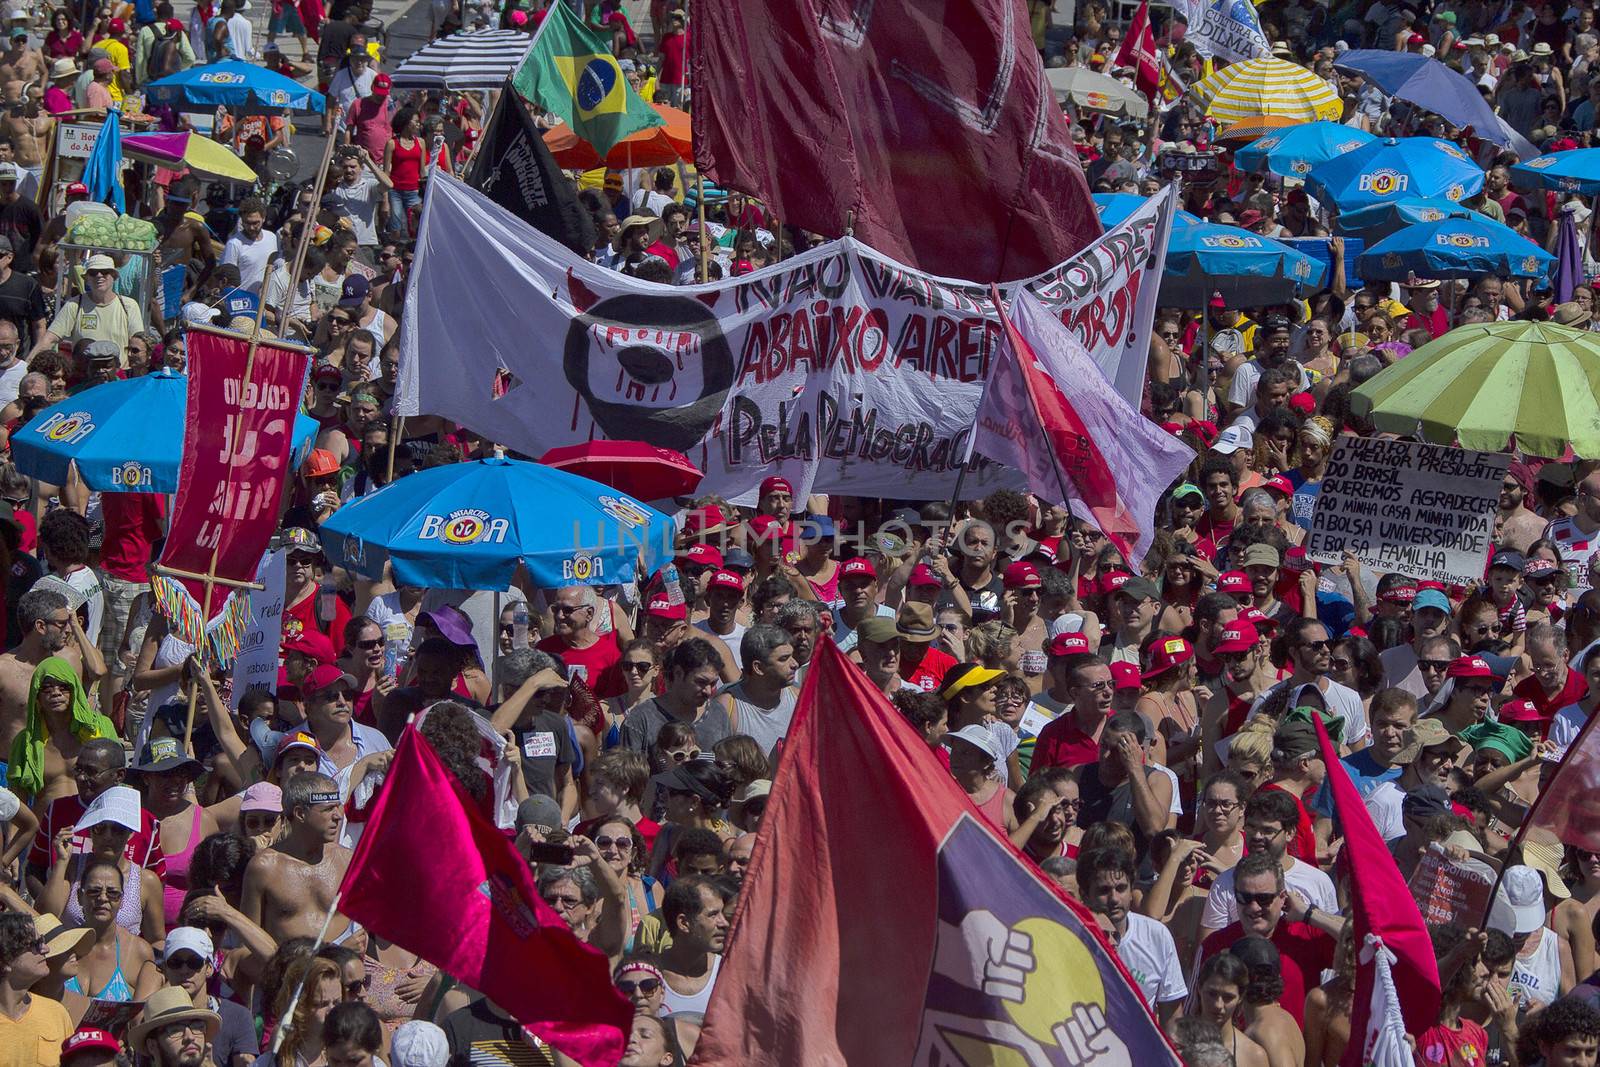 BRAZIL-RIO DE JANEIRO-ROUSSEFF SUPPORTERS MARCH by newzulu